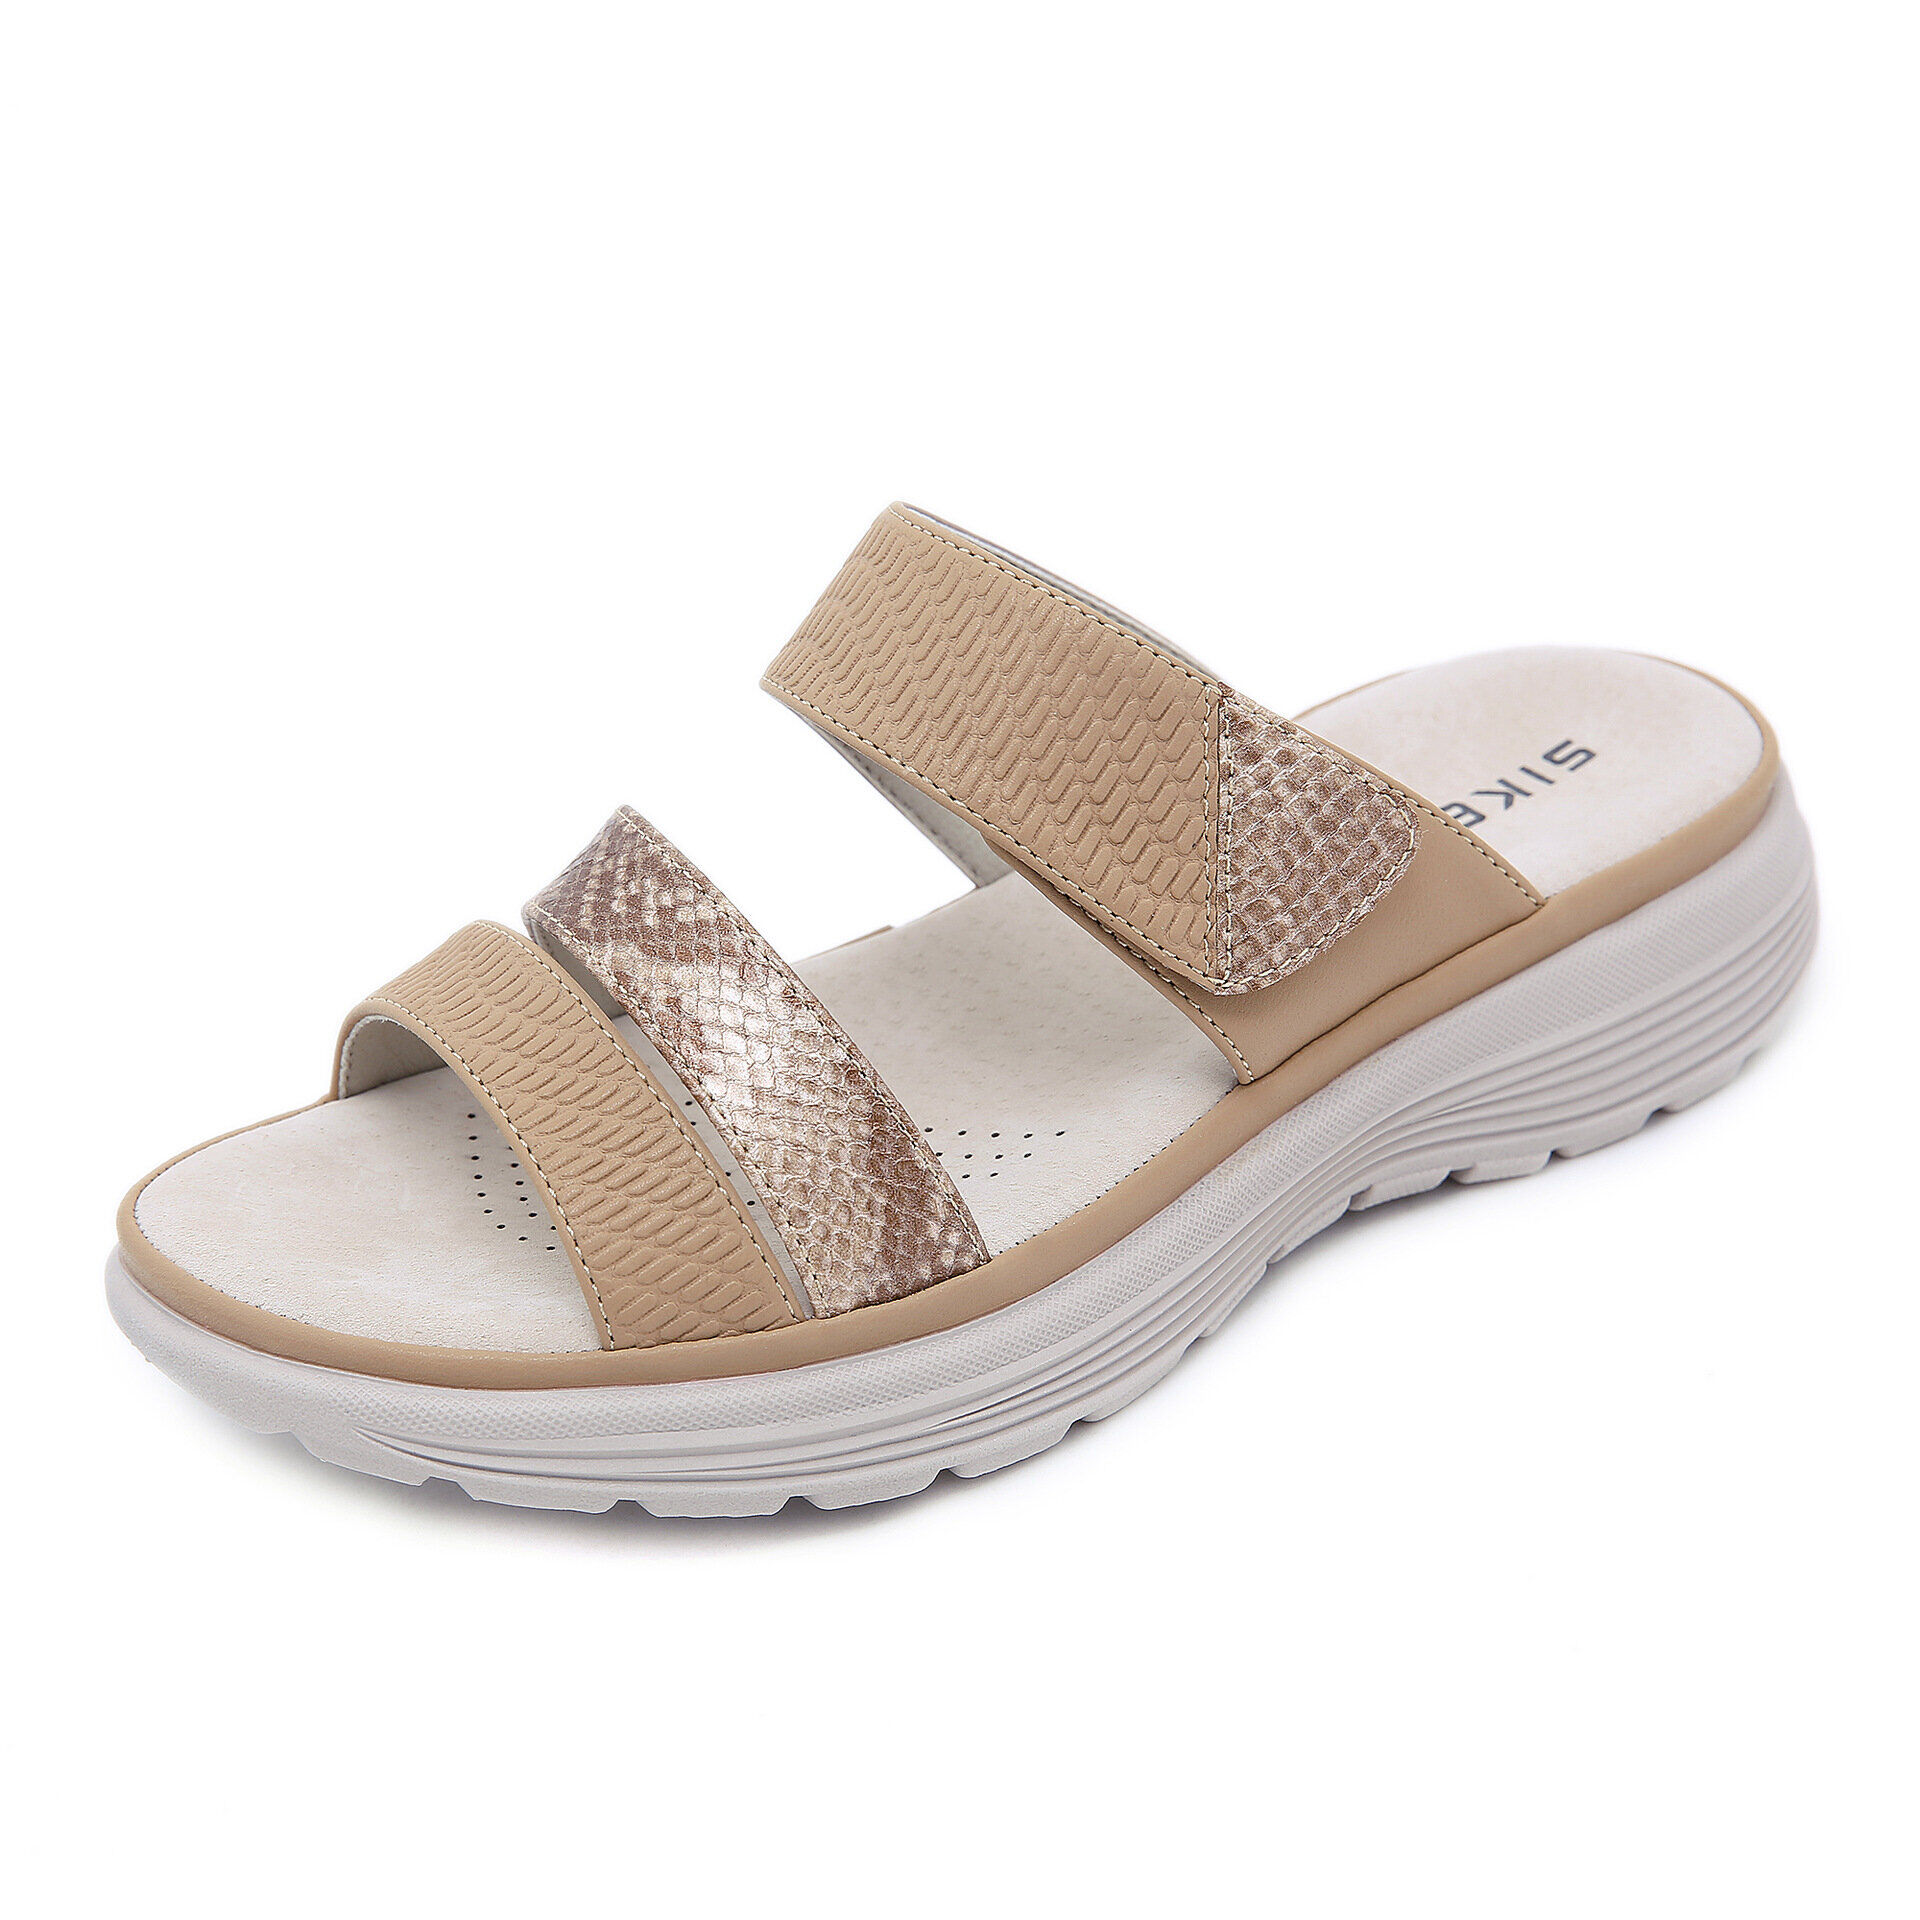 Newchic Women Veins Comfortable Hook Loop Slippers Casual Beach Sandals